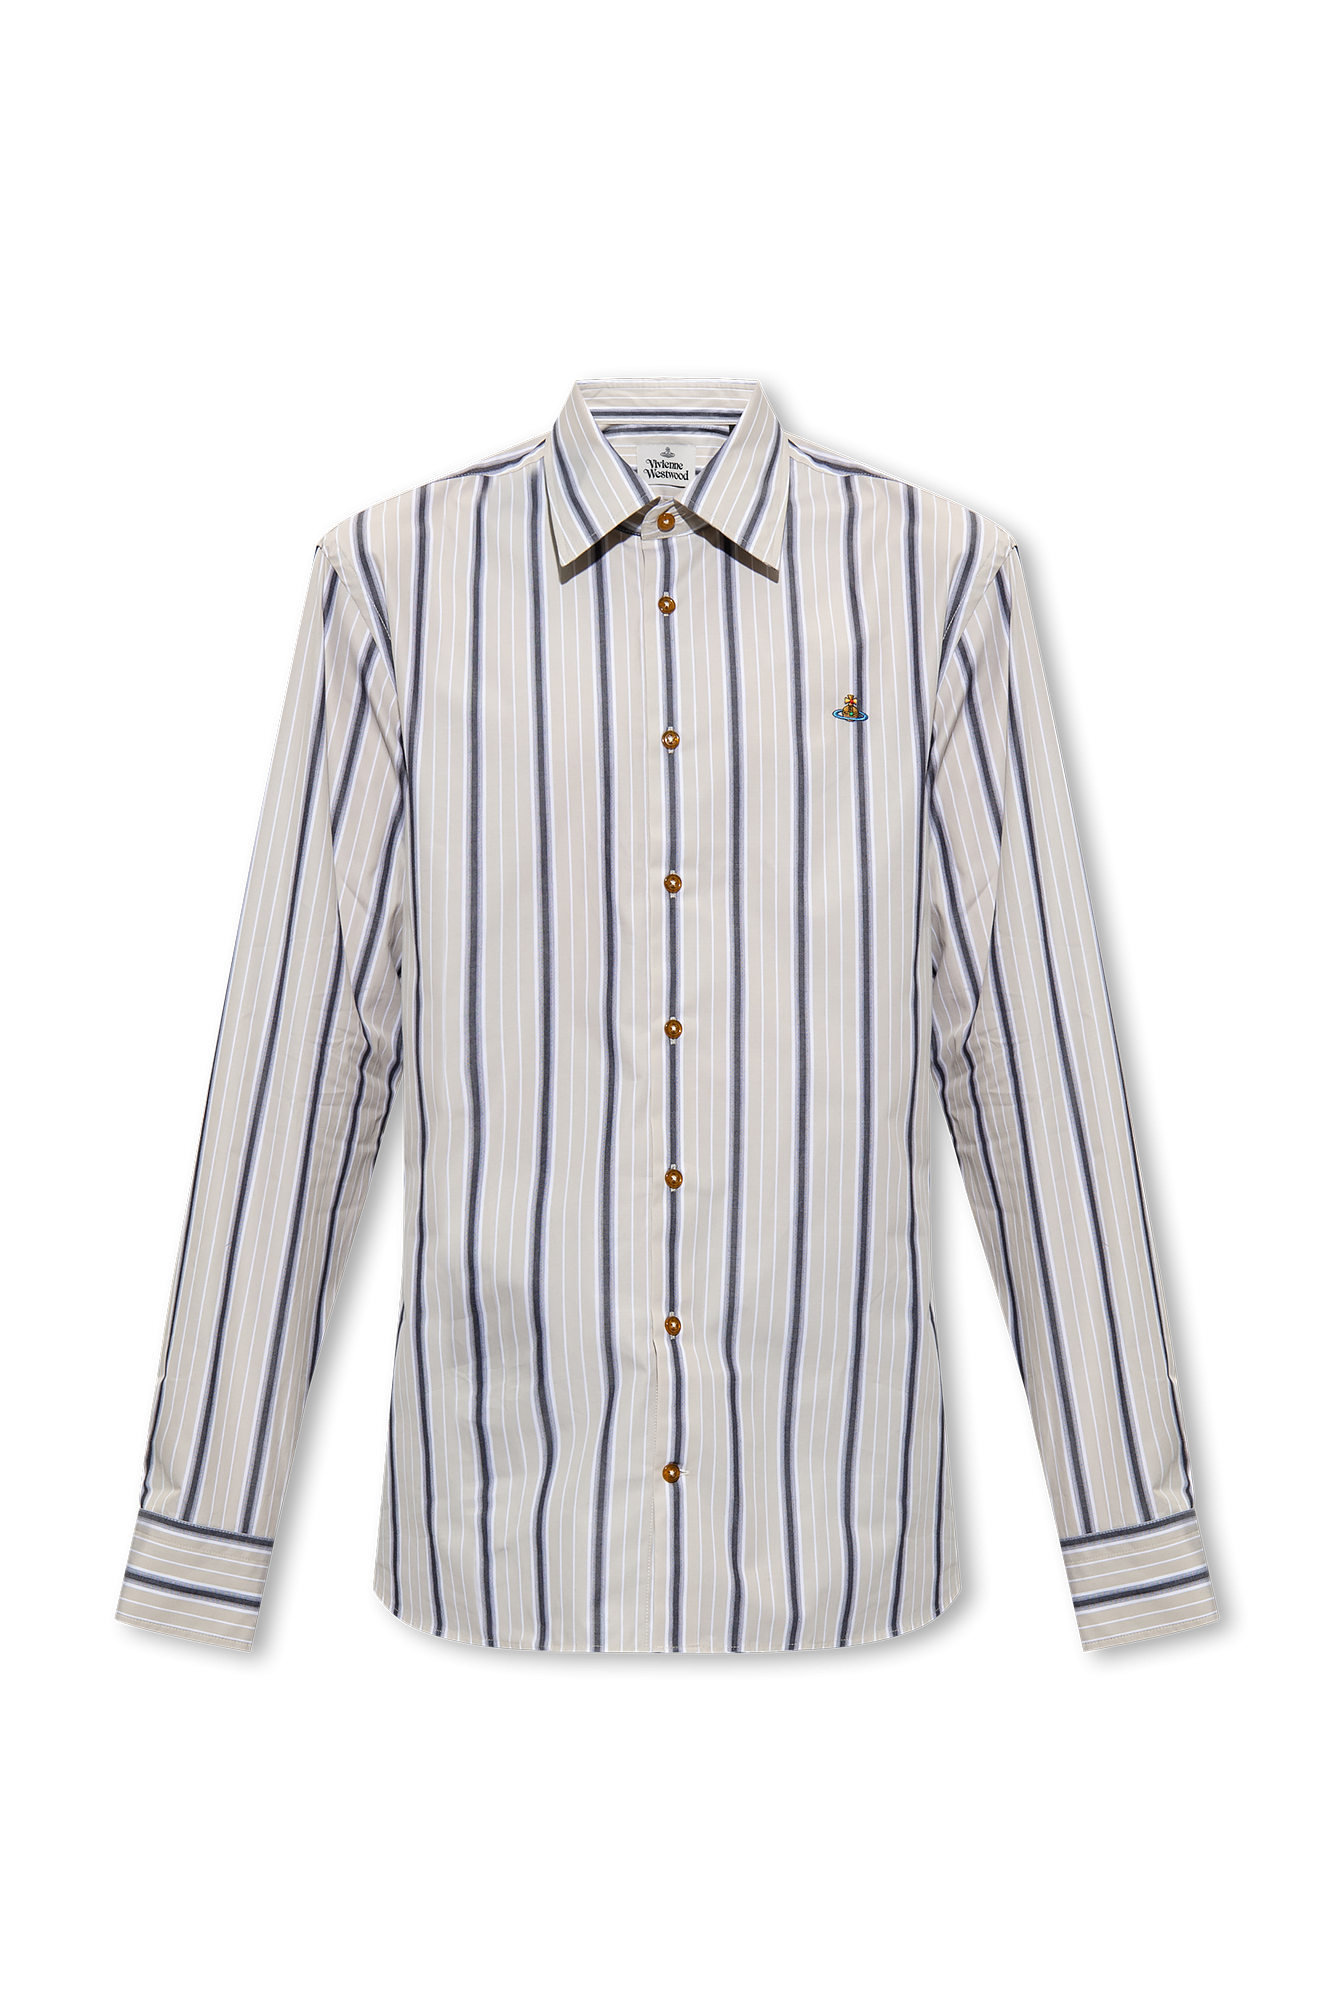 Vivienne Westwood ‘Ghost’ striped shirt